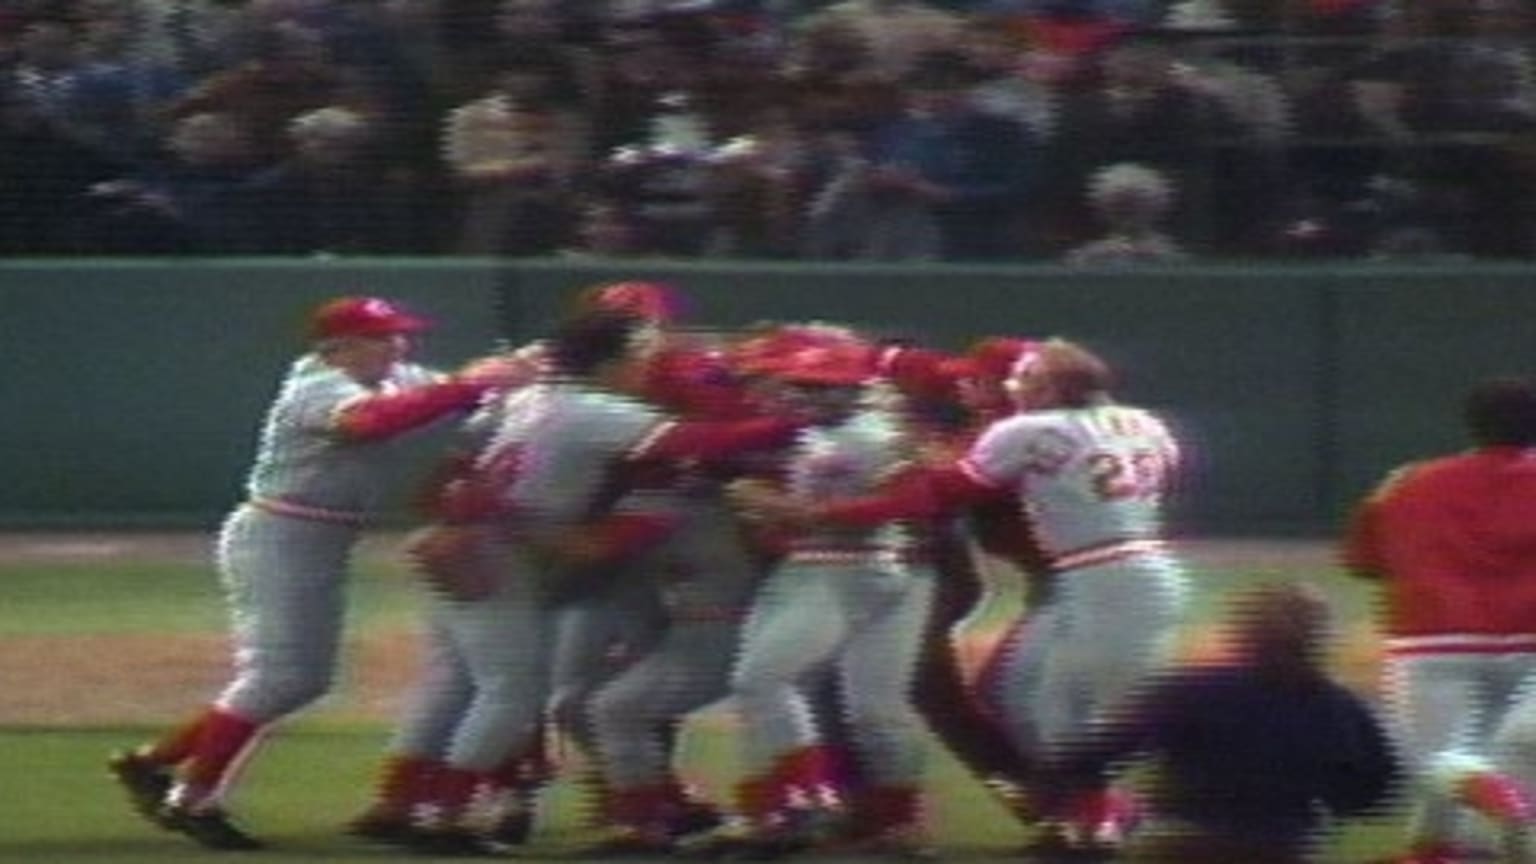 Red Sox salute their 1975 AL champions - The Boston Globe